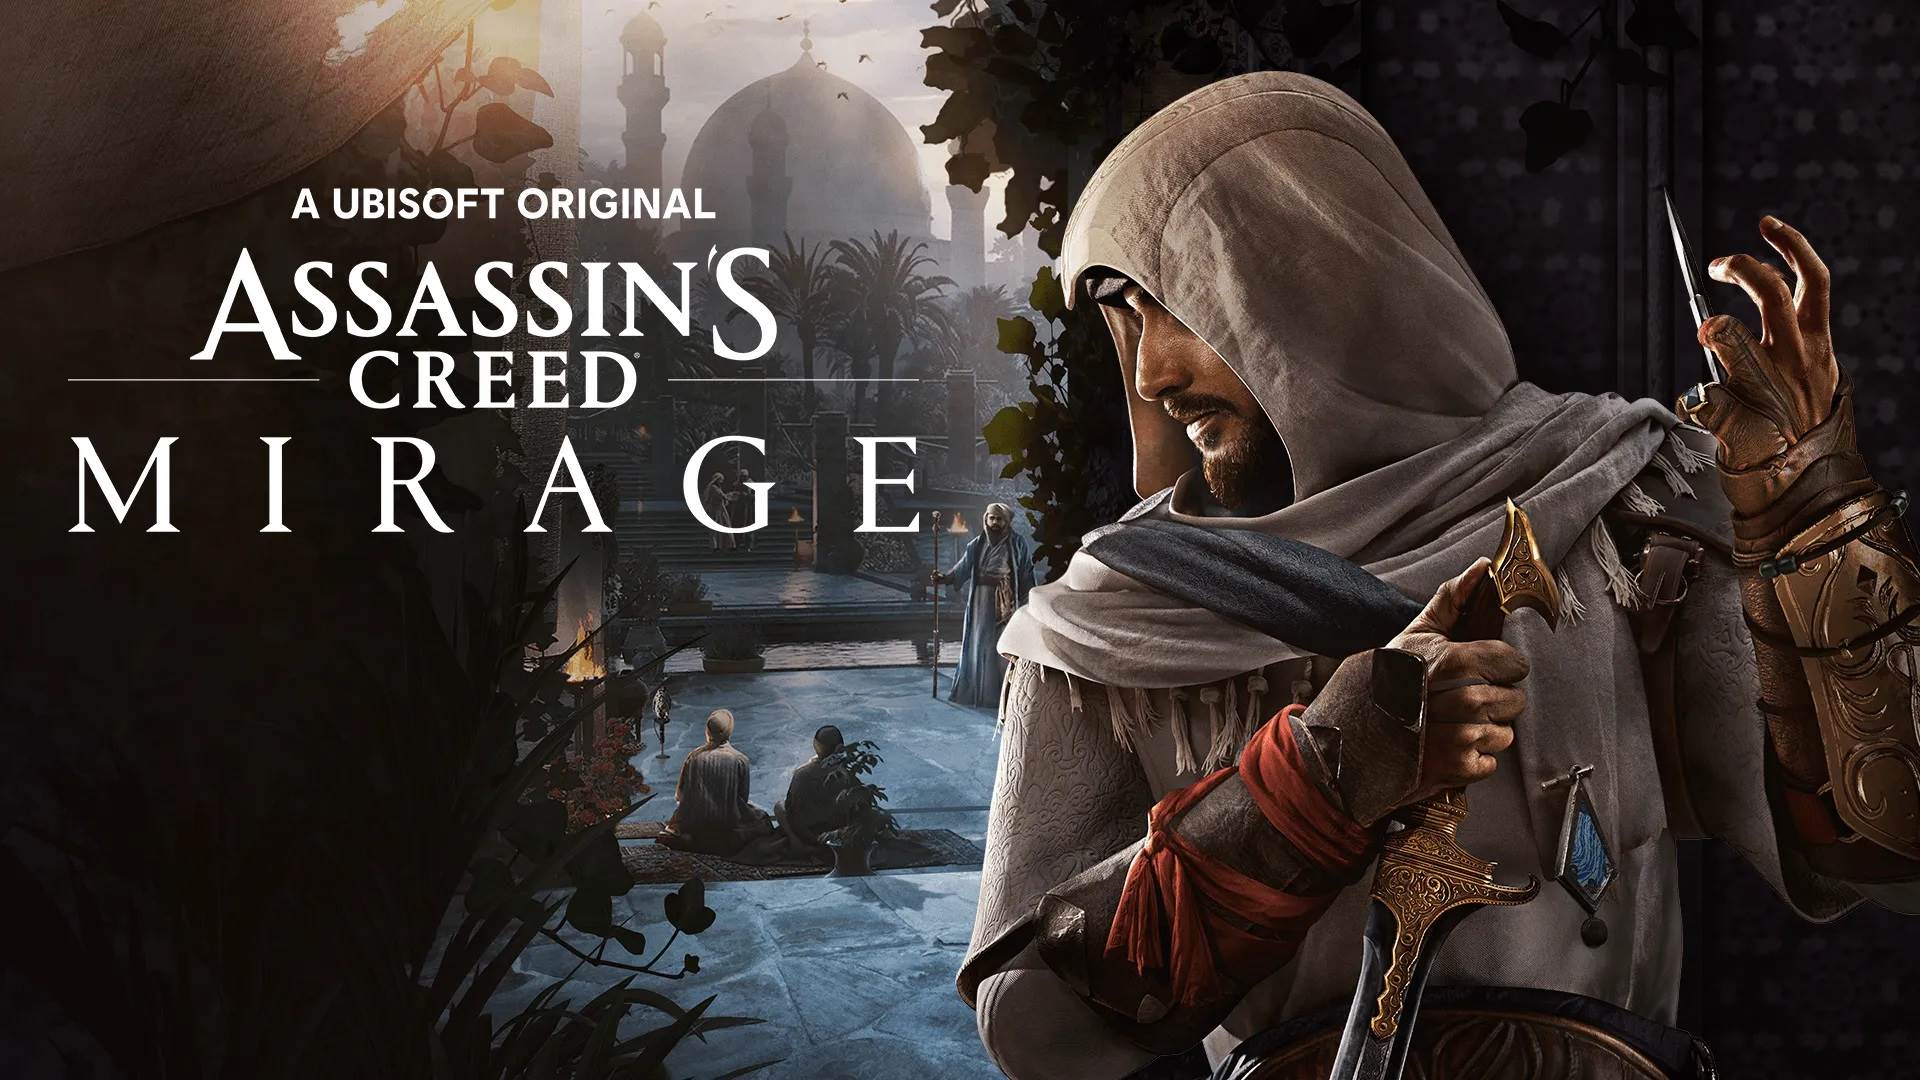  Assassin’s Creed Mirage.jpg 